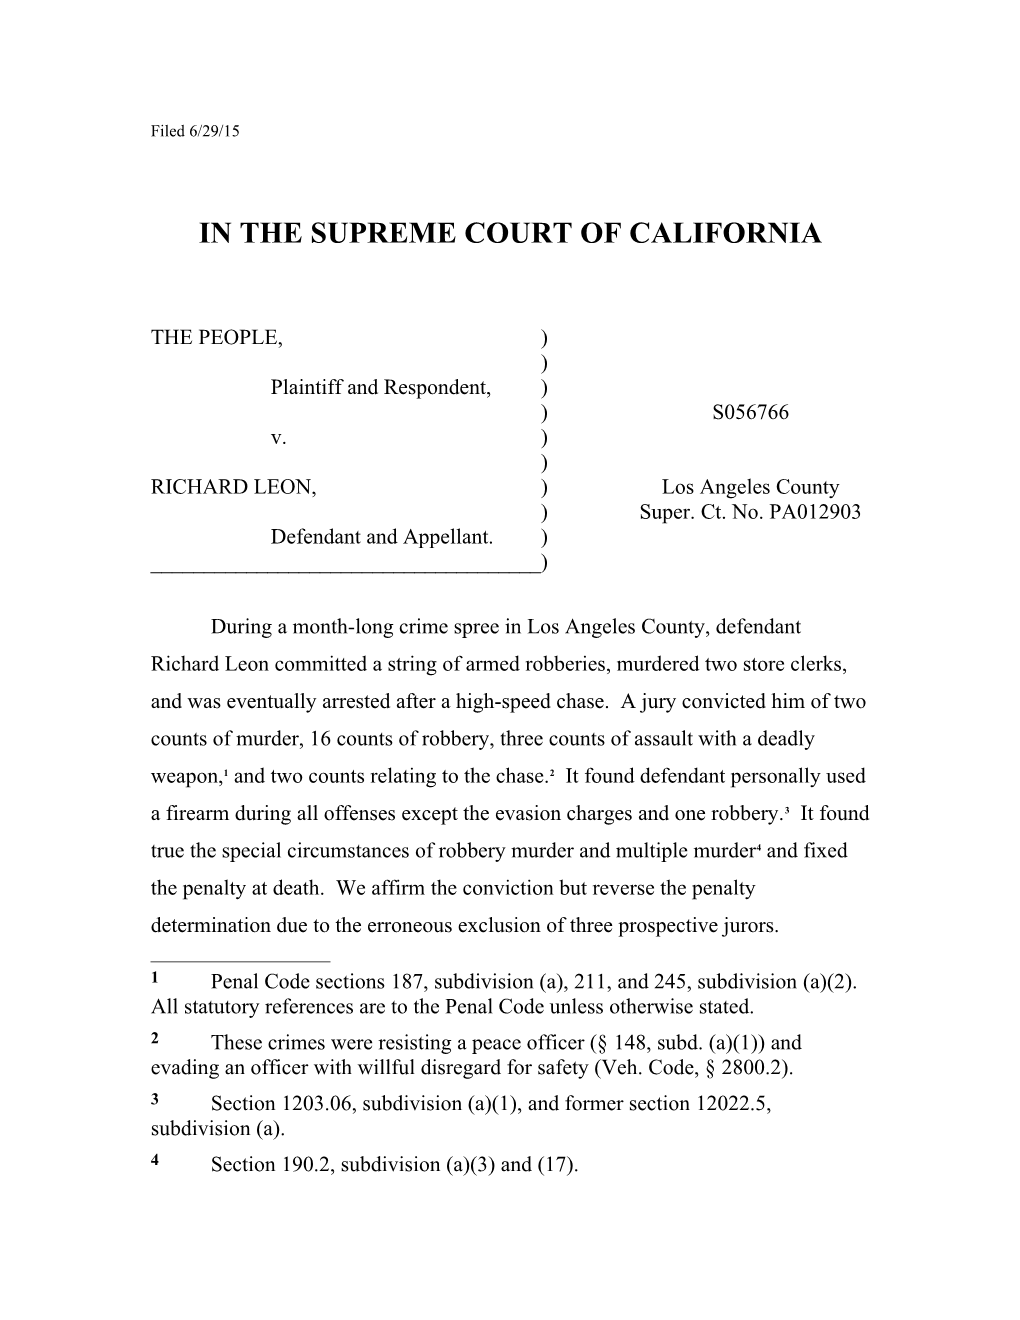 In the Supreme Court of California s7